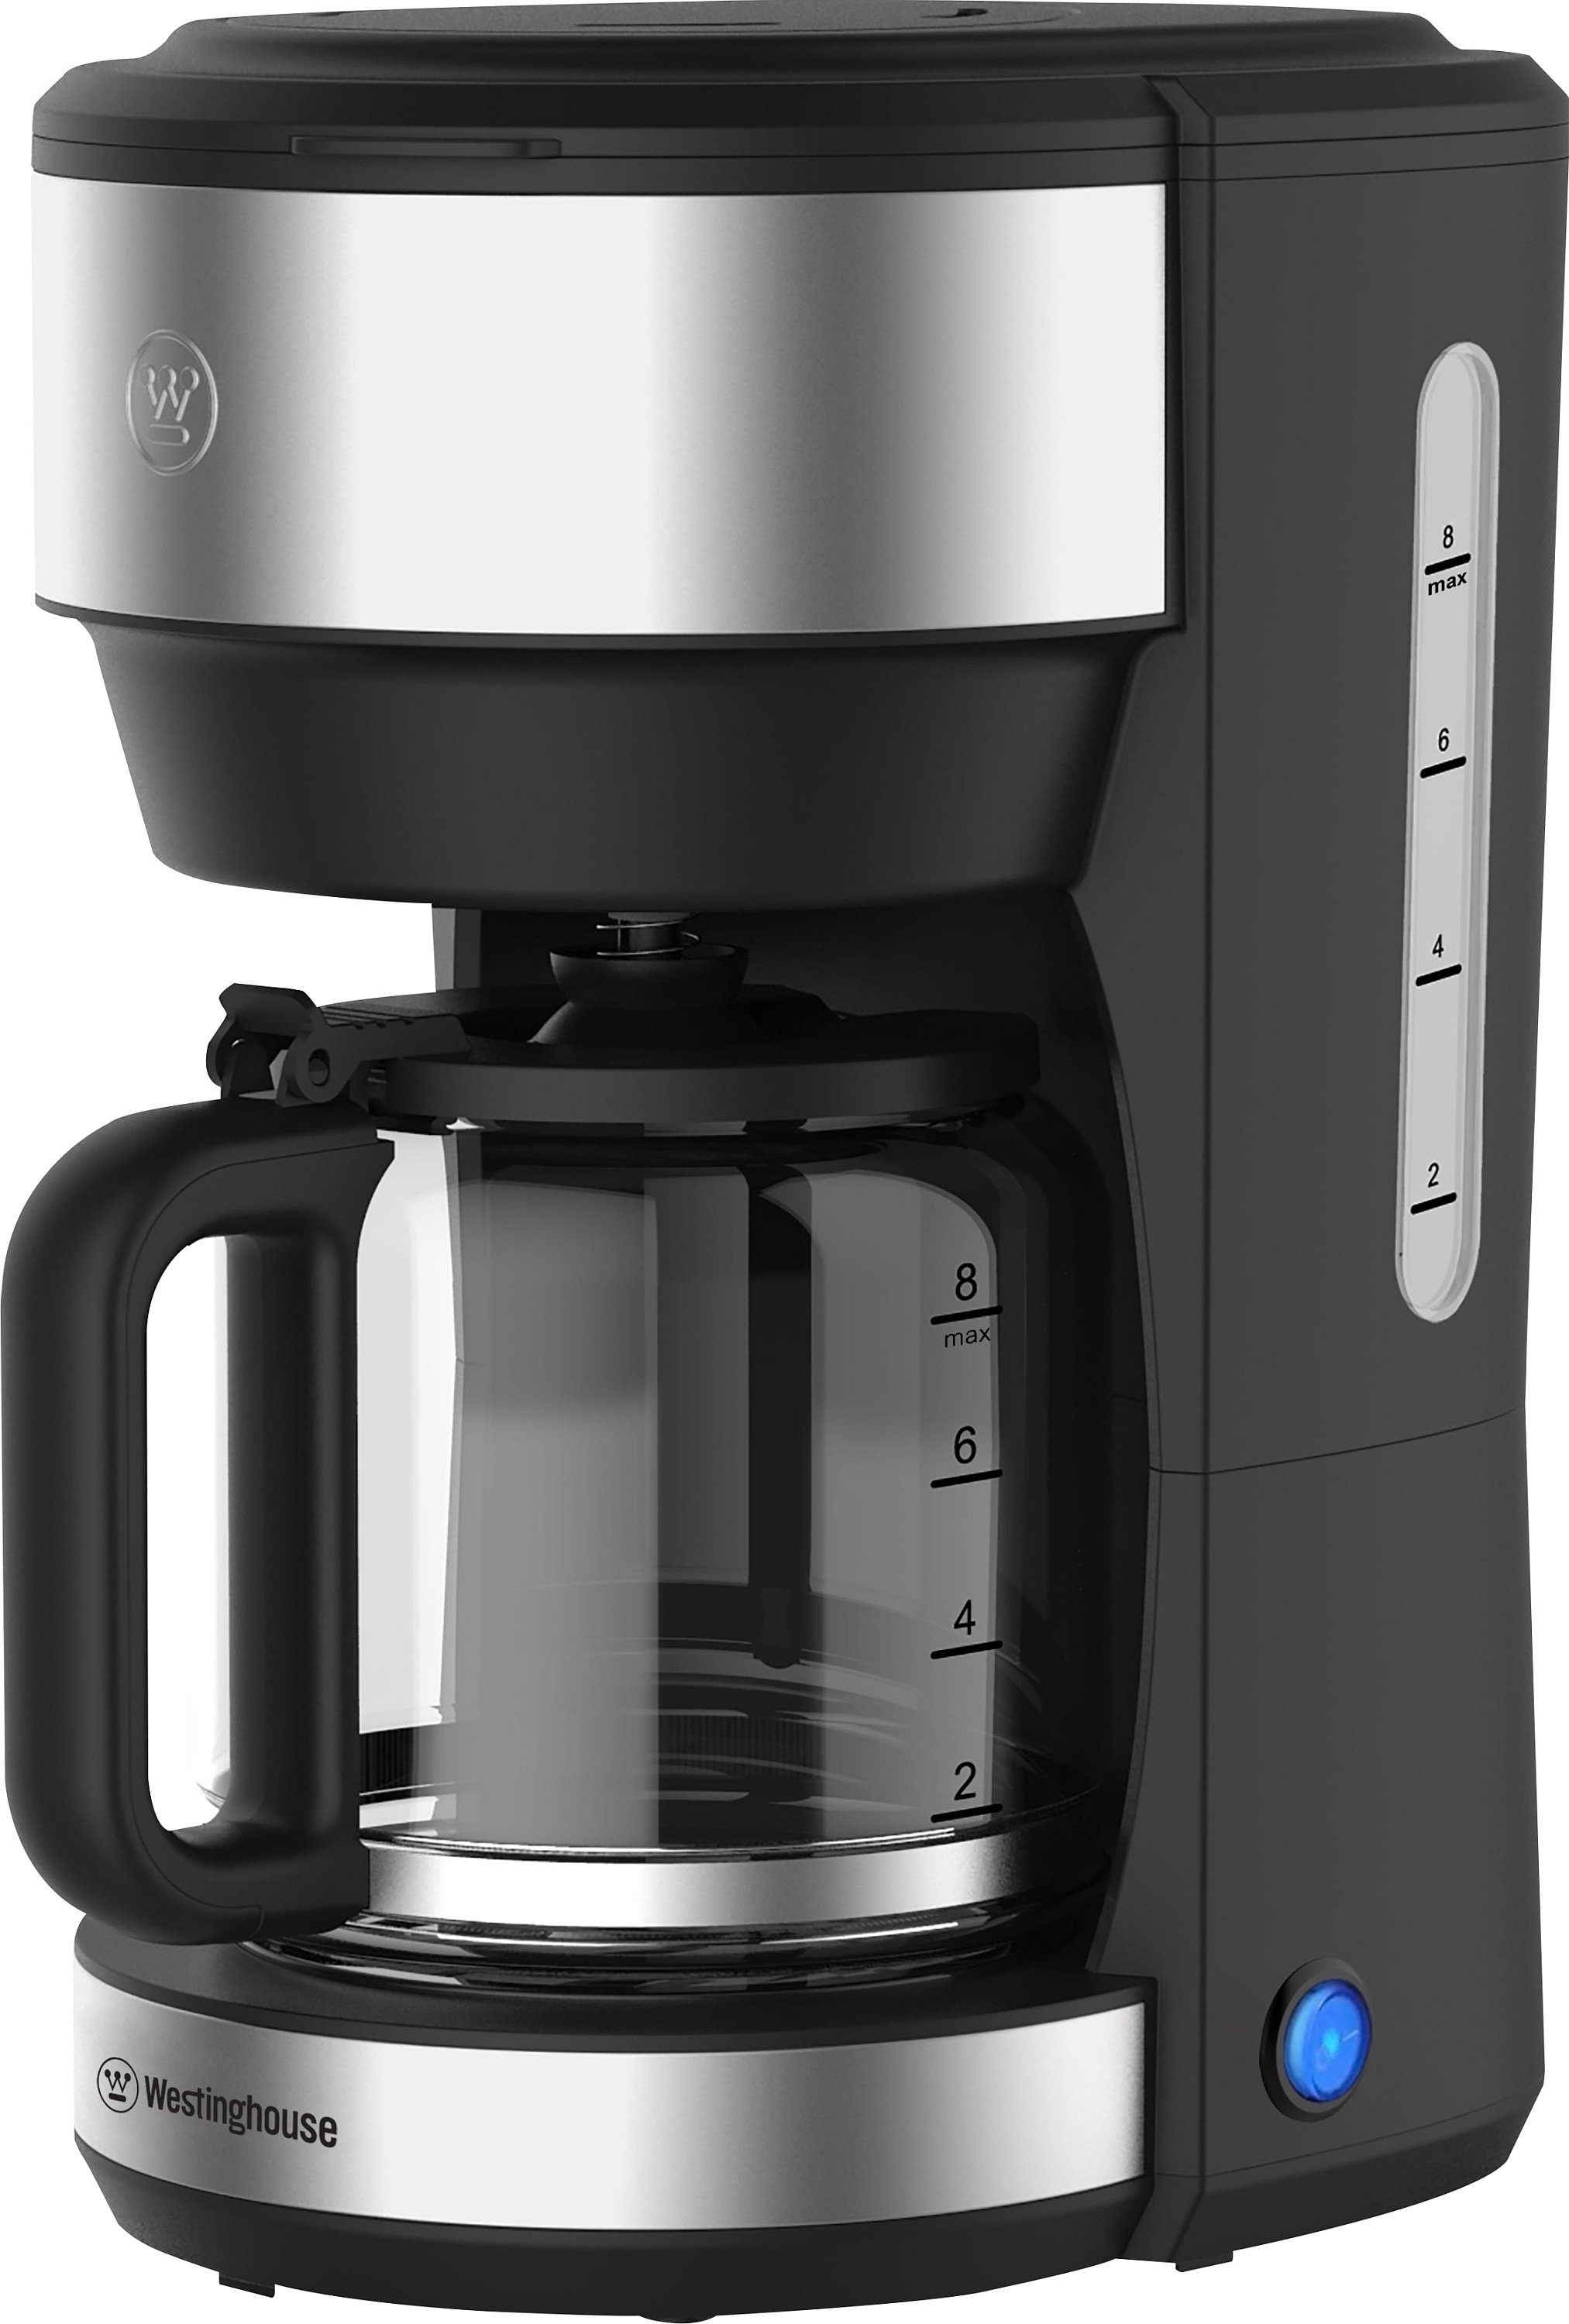 Westinghouse Filterkaffeemaschine WKCM621 Basic-Serie, 1.25l Kaffeekanne, Permanentfilter, 30 min Warmhaltefunktion, Tropfschutz silber-silber